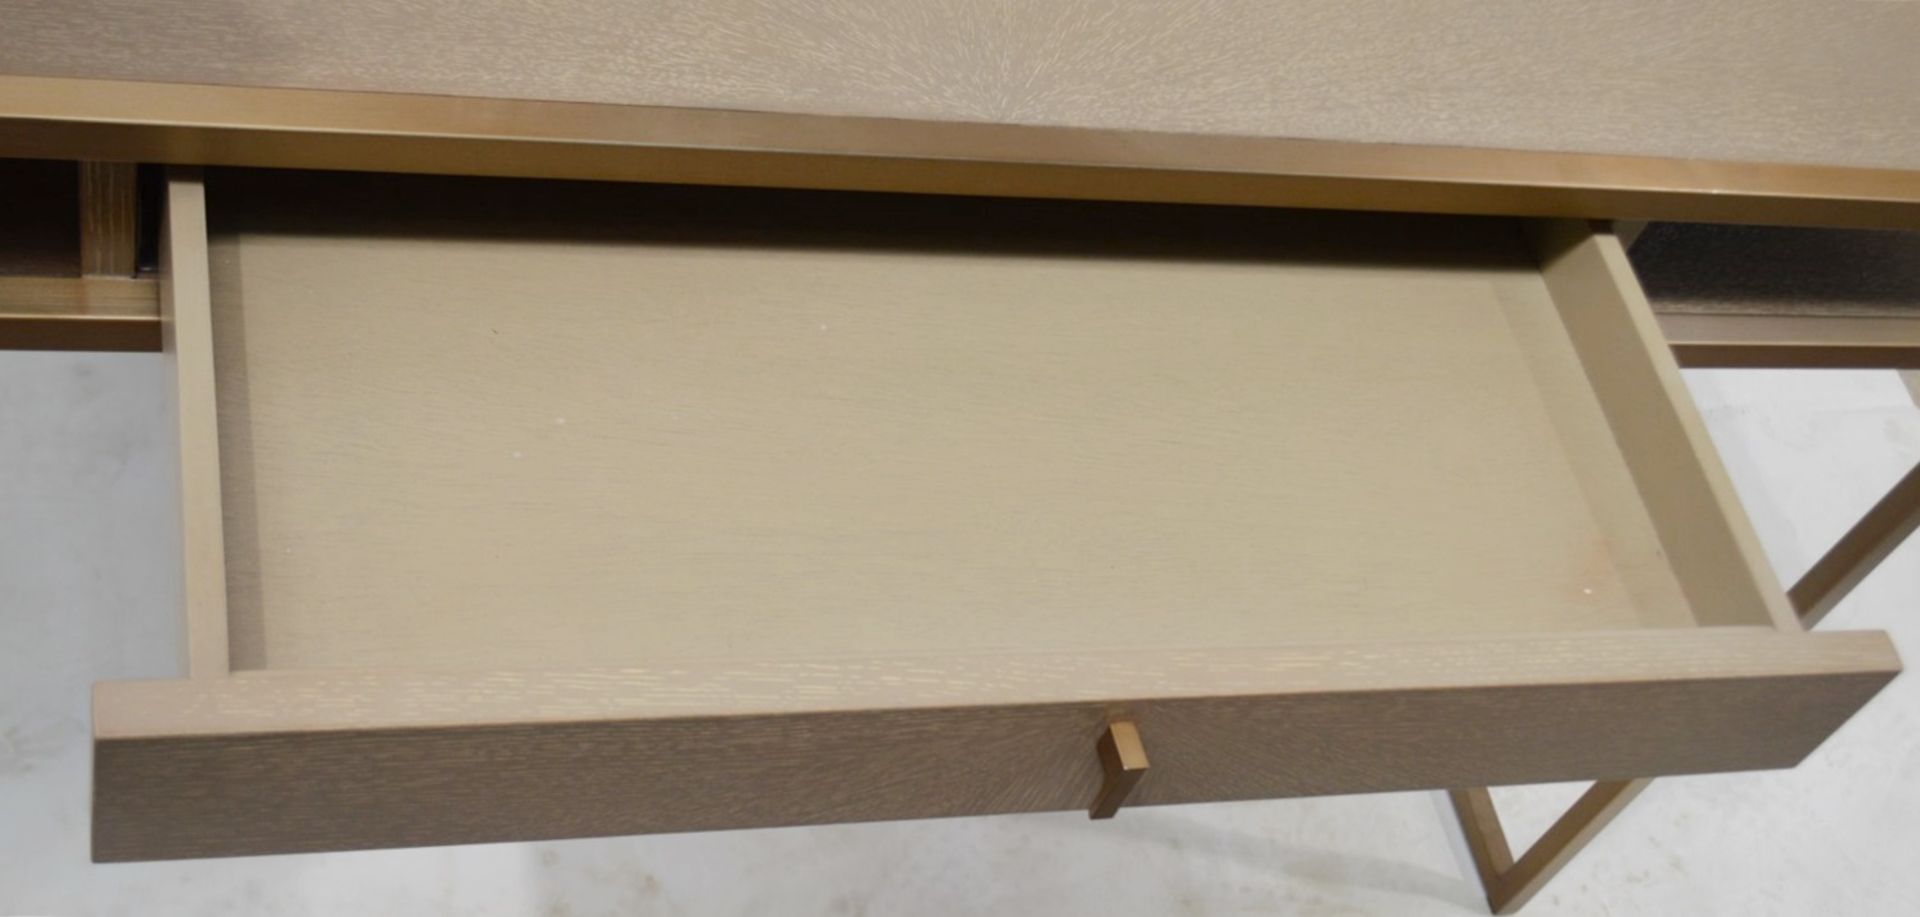 1 x EICHHOLTZ 'Highland' Designer Desk With Washed Oak And Brushed Brass Finishes - Ex-Display - - Image 7 of 12